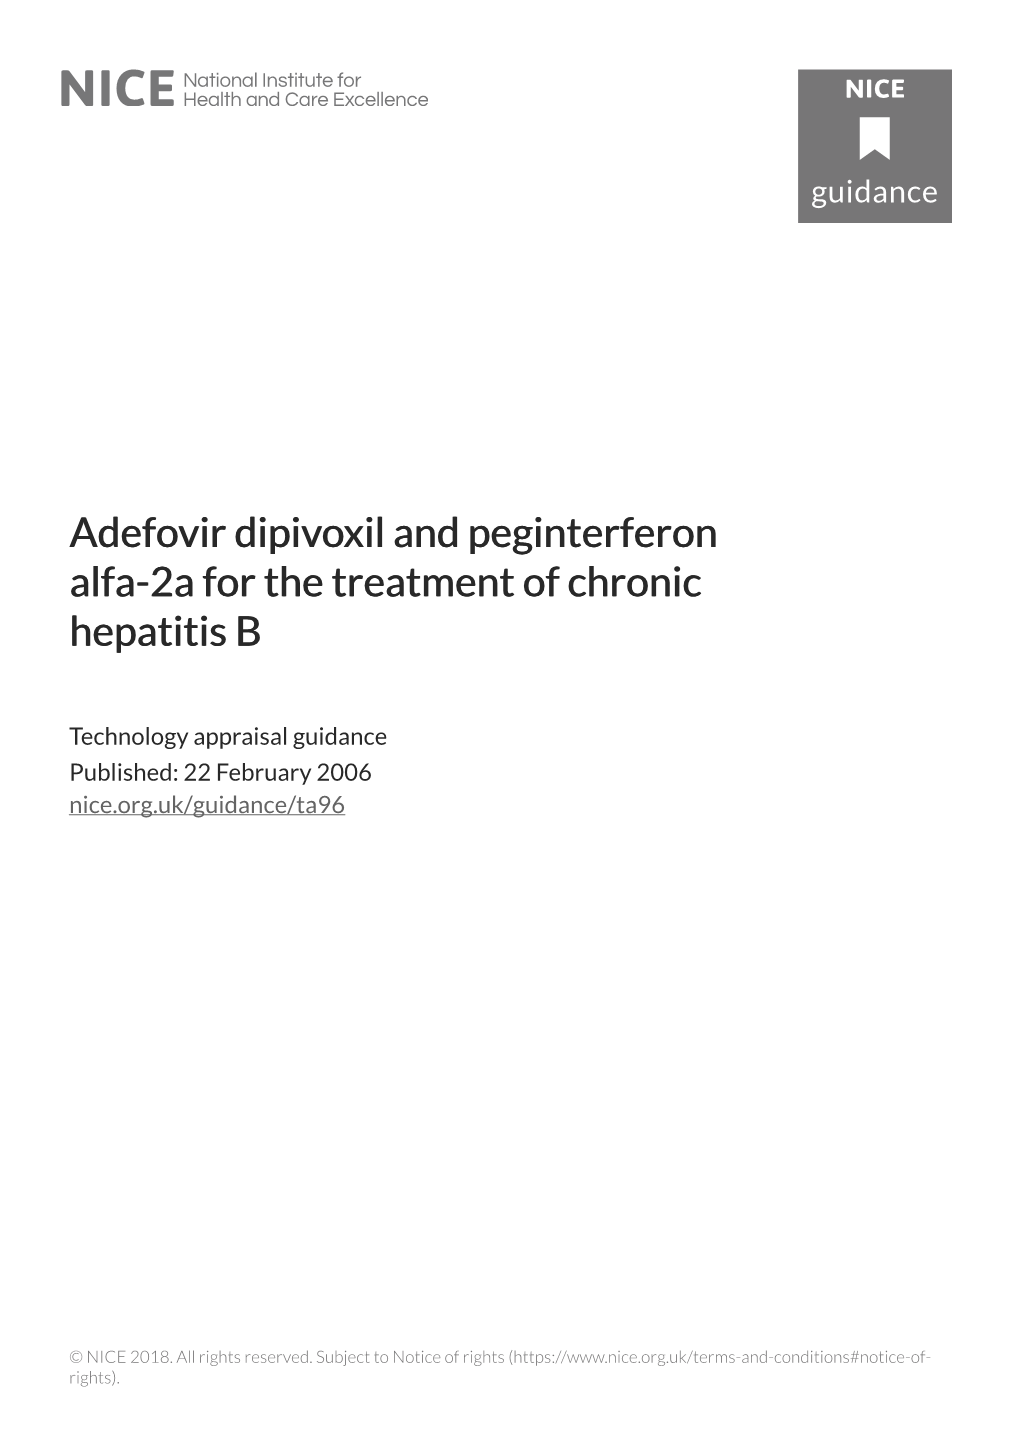 Adefovir Dipivoxil and Peginterferon Alfa-2A for the Treatment of Chronic Hepatitis B